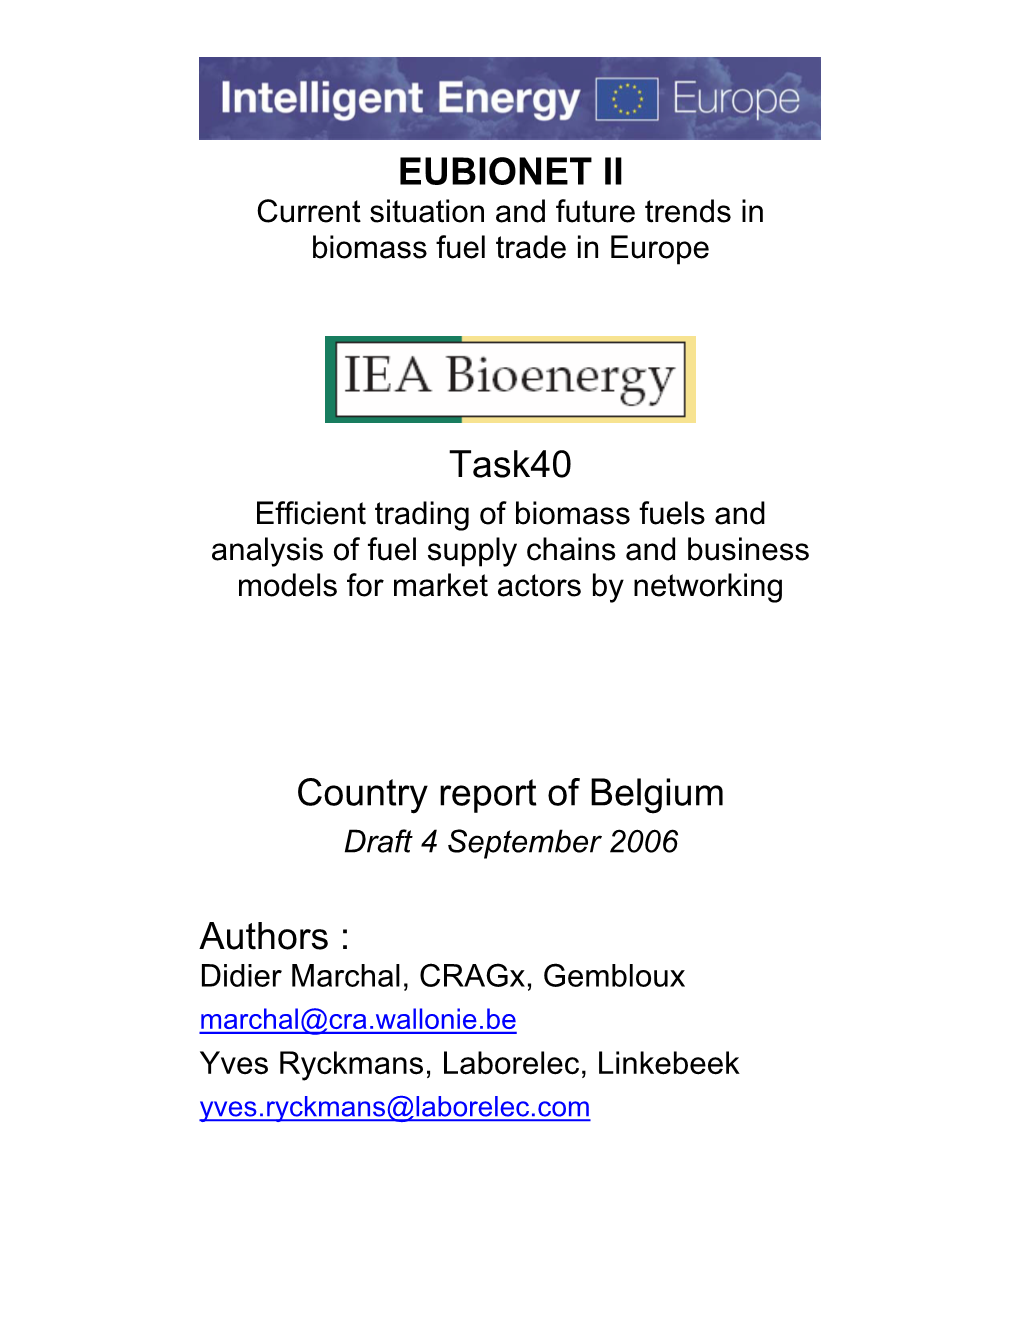 EUBIONET II Task40 Country Report of Belgium Authors